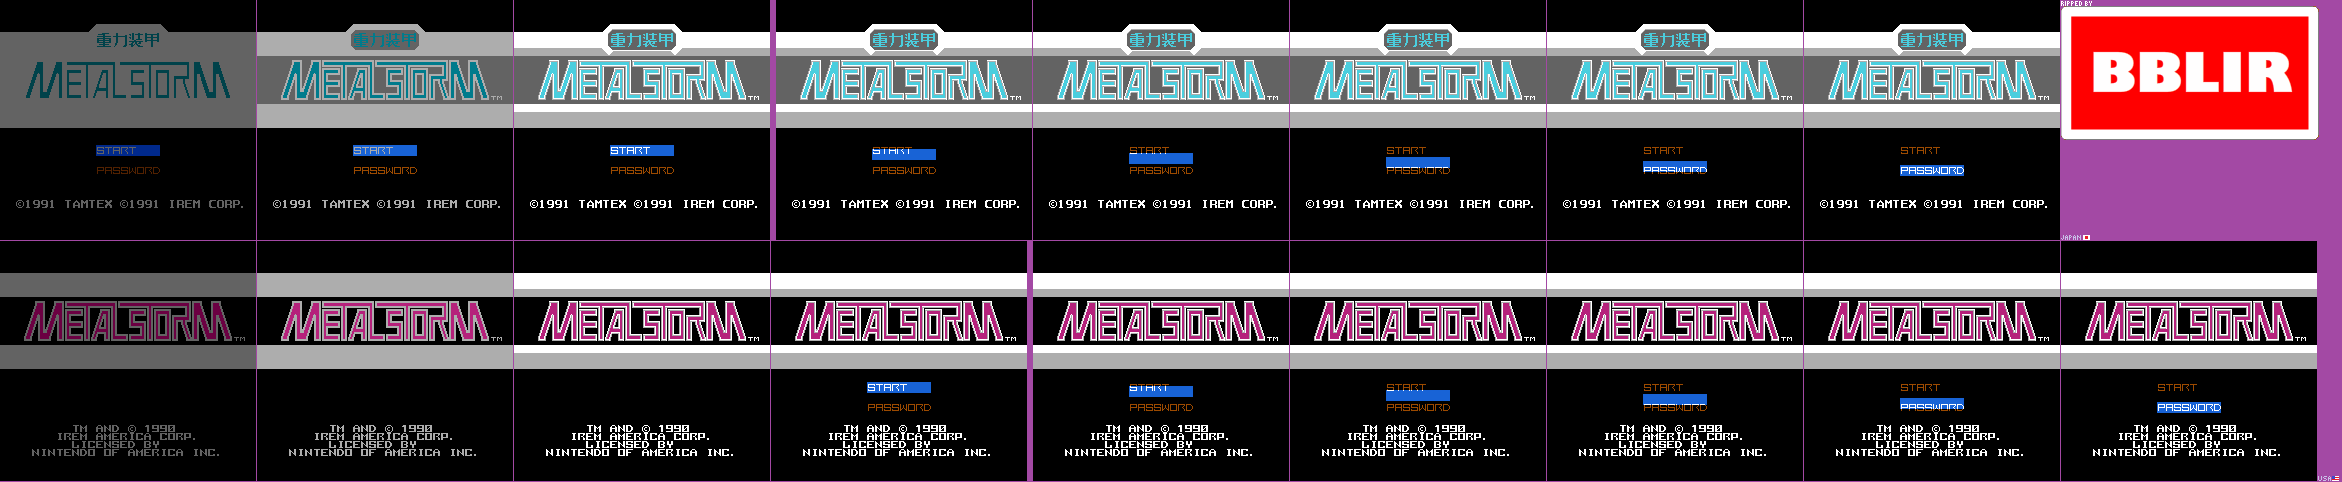 Metal Storm - Title Screen